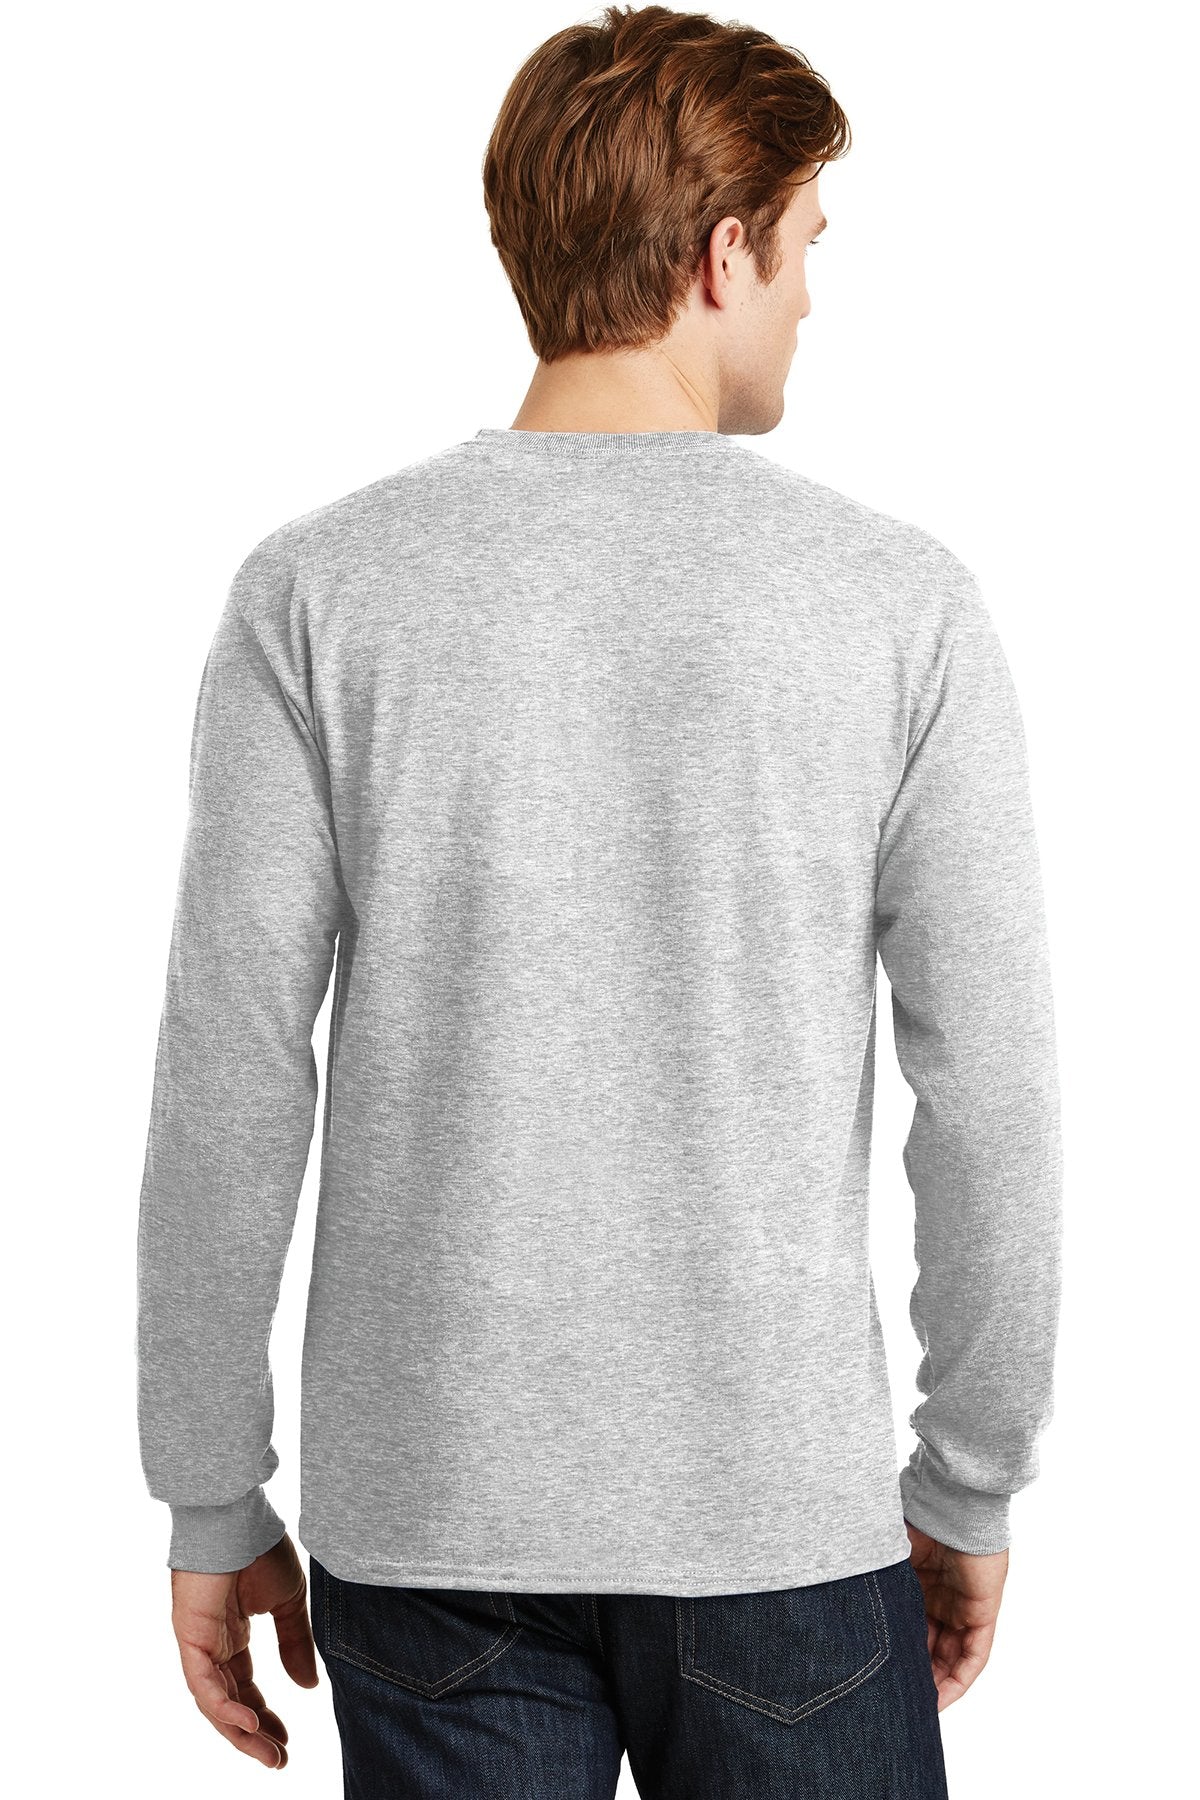 gildan dryblend cotton poly long sleeve t shirt 8400 ash grey